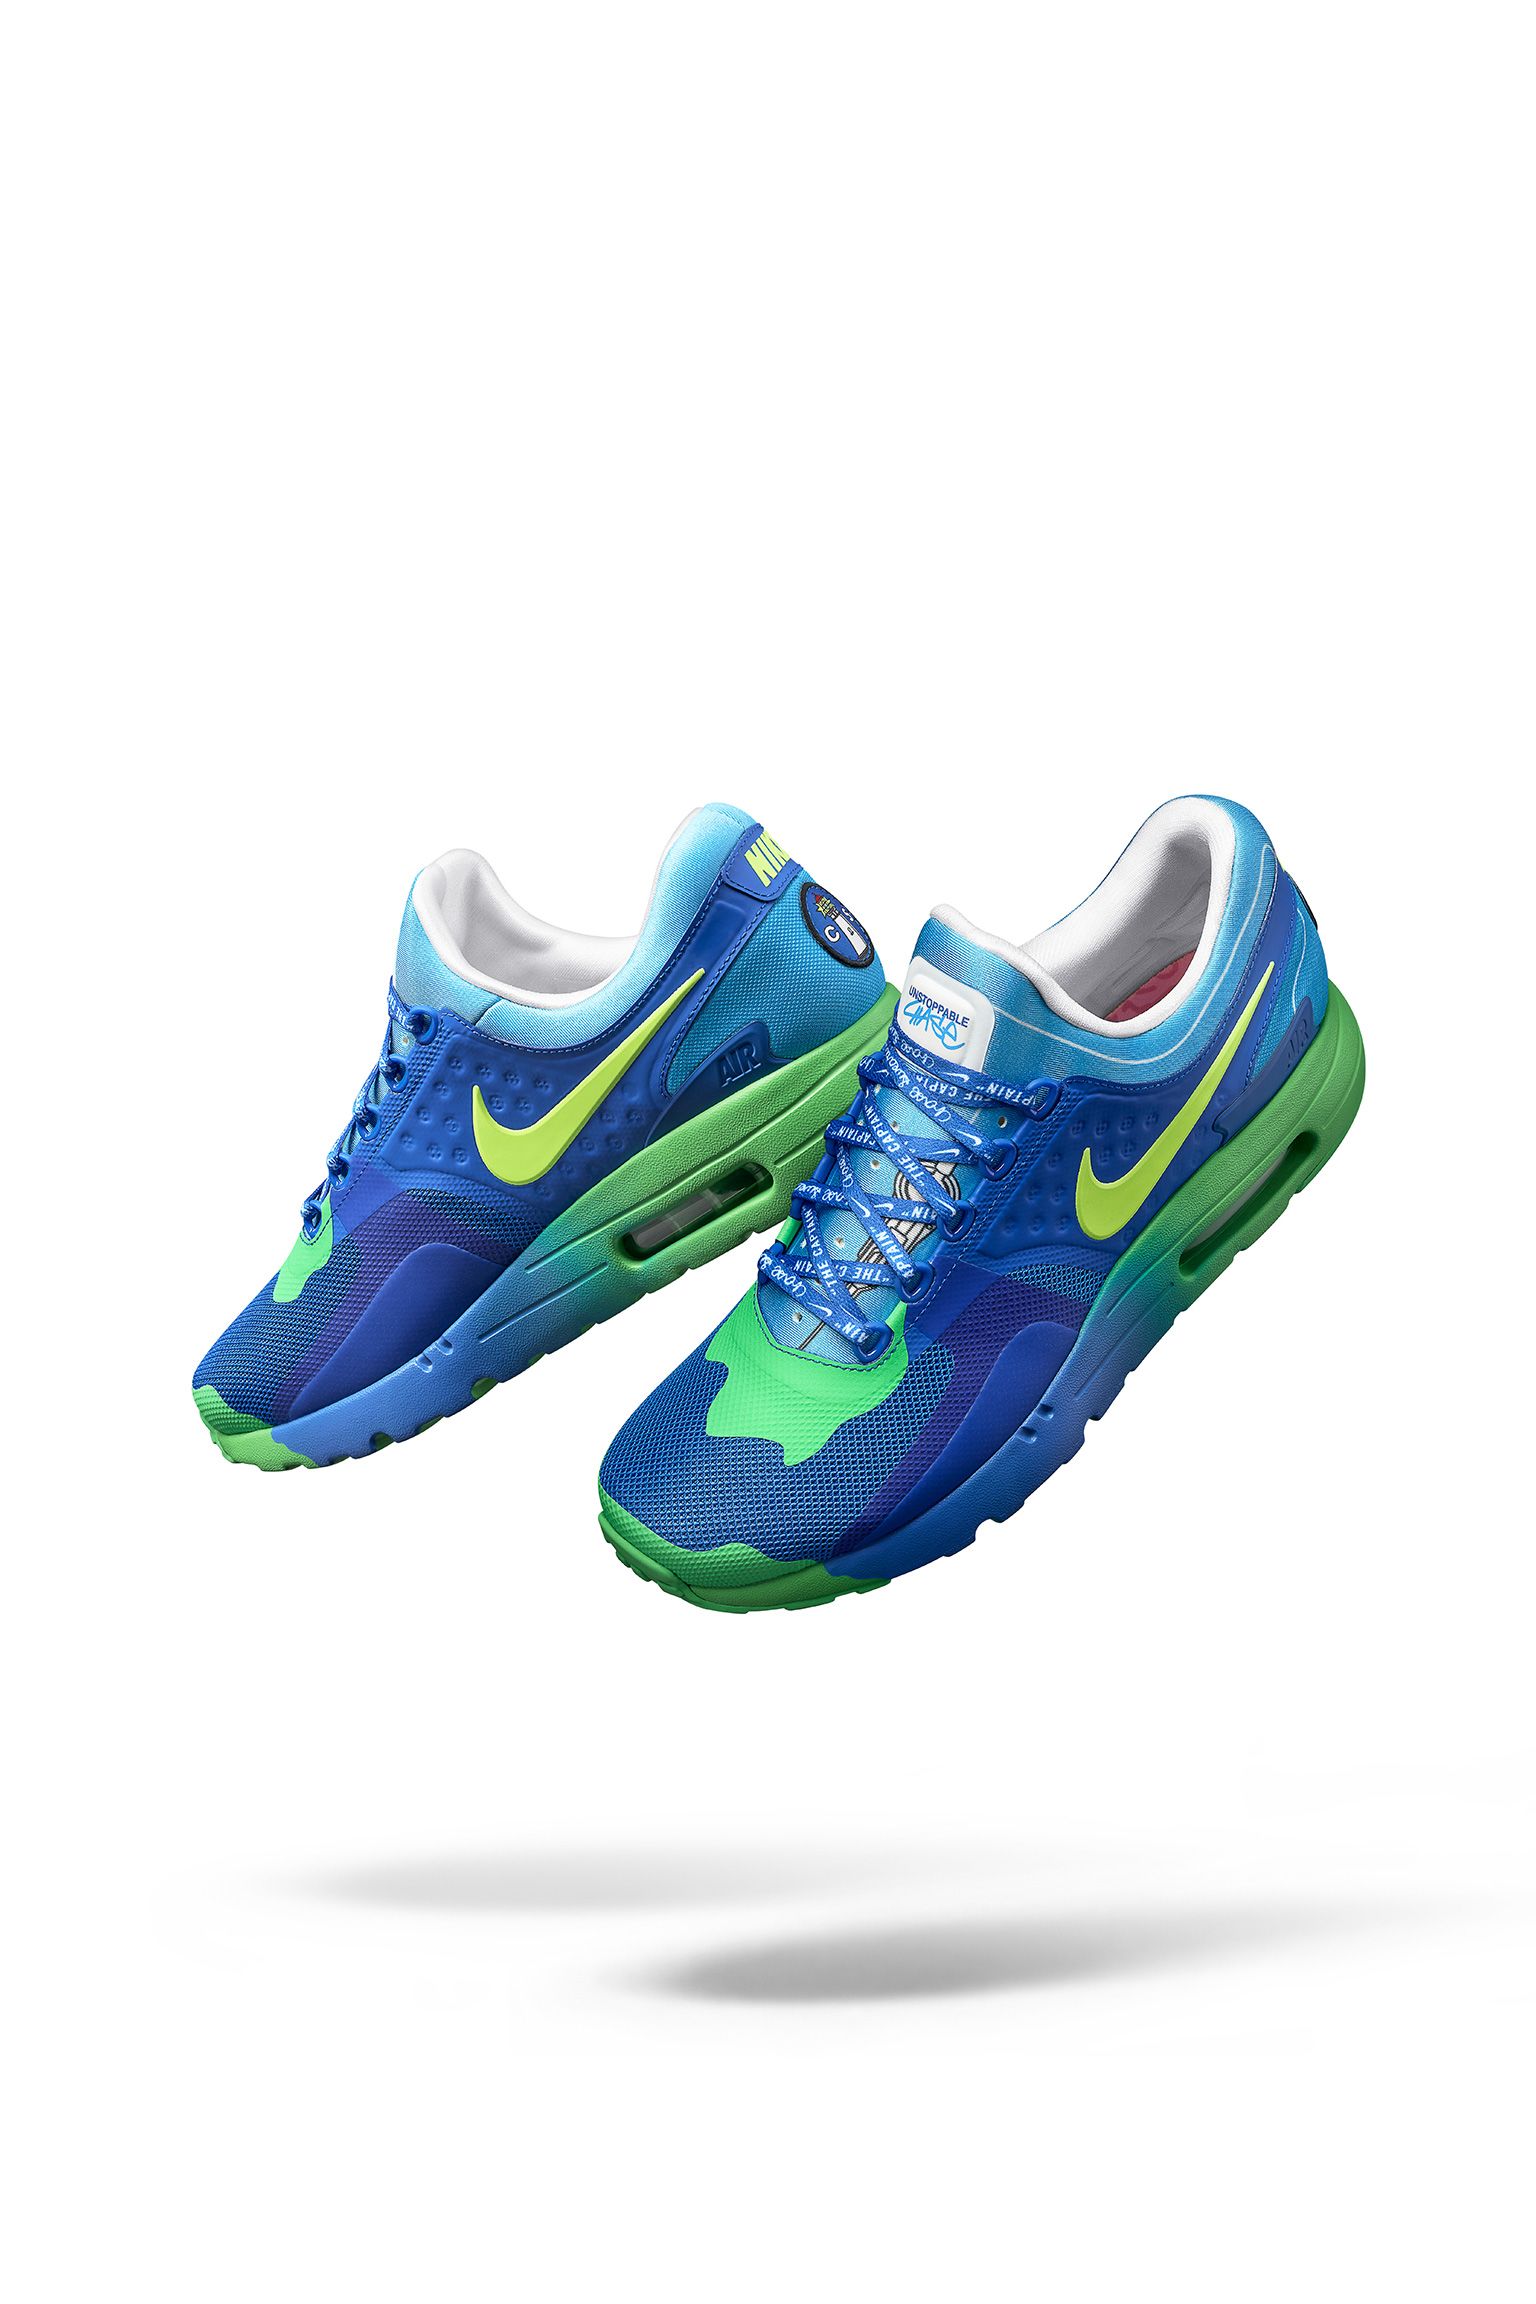 spin shocking Sunburn Nike Air Max Zero Doernbecher 'Hyper Cobalt' Release Date. Nike SNKRS